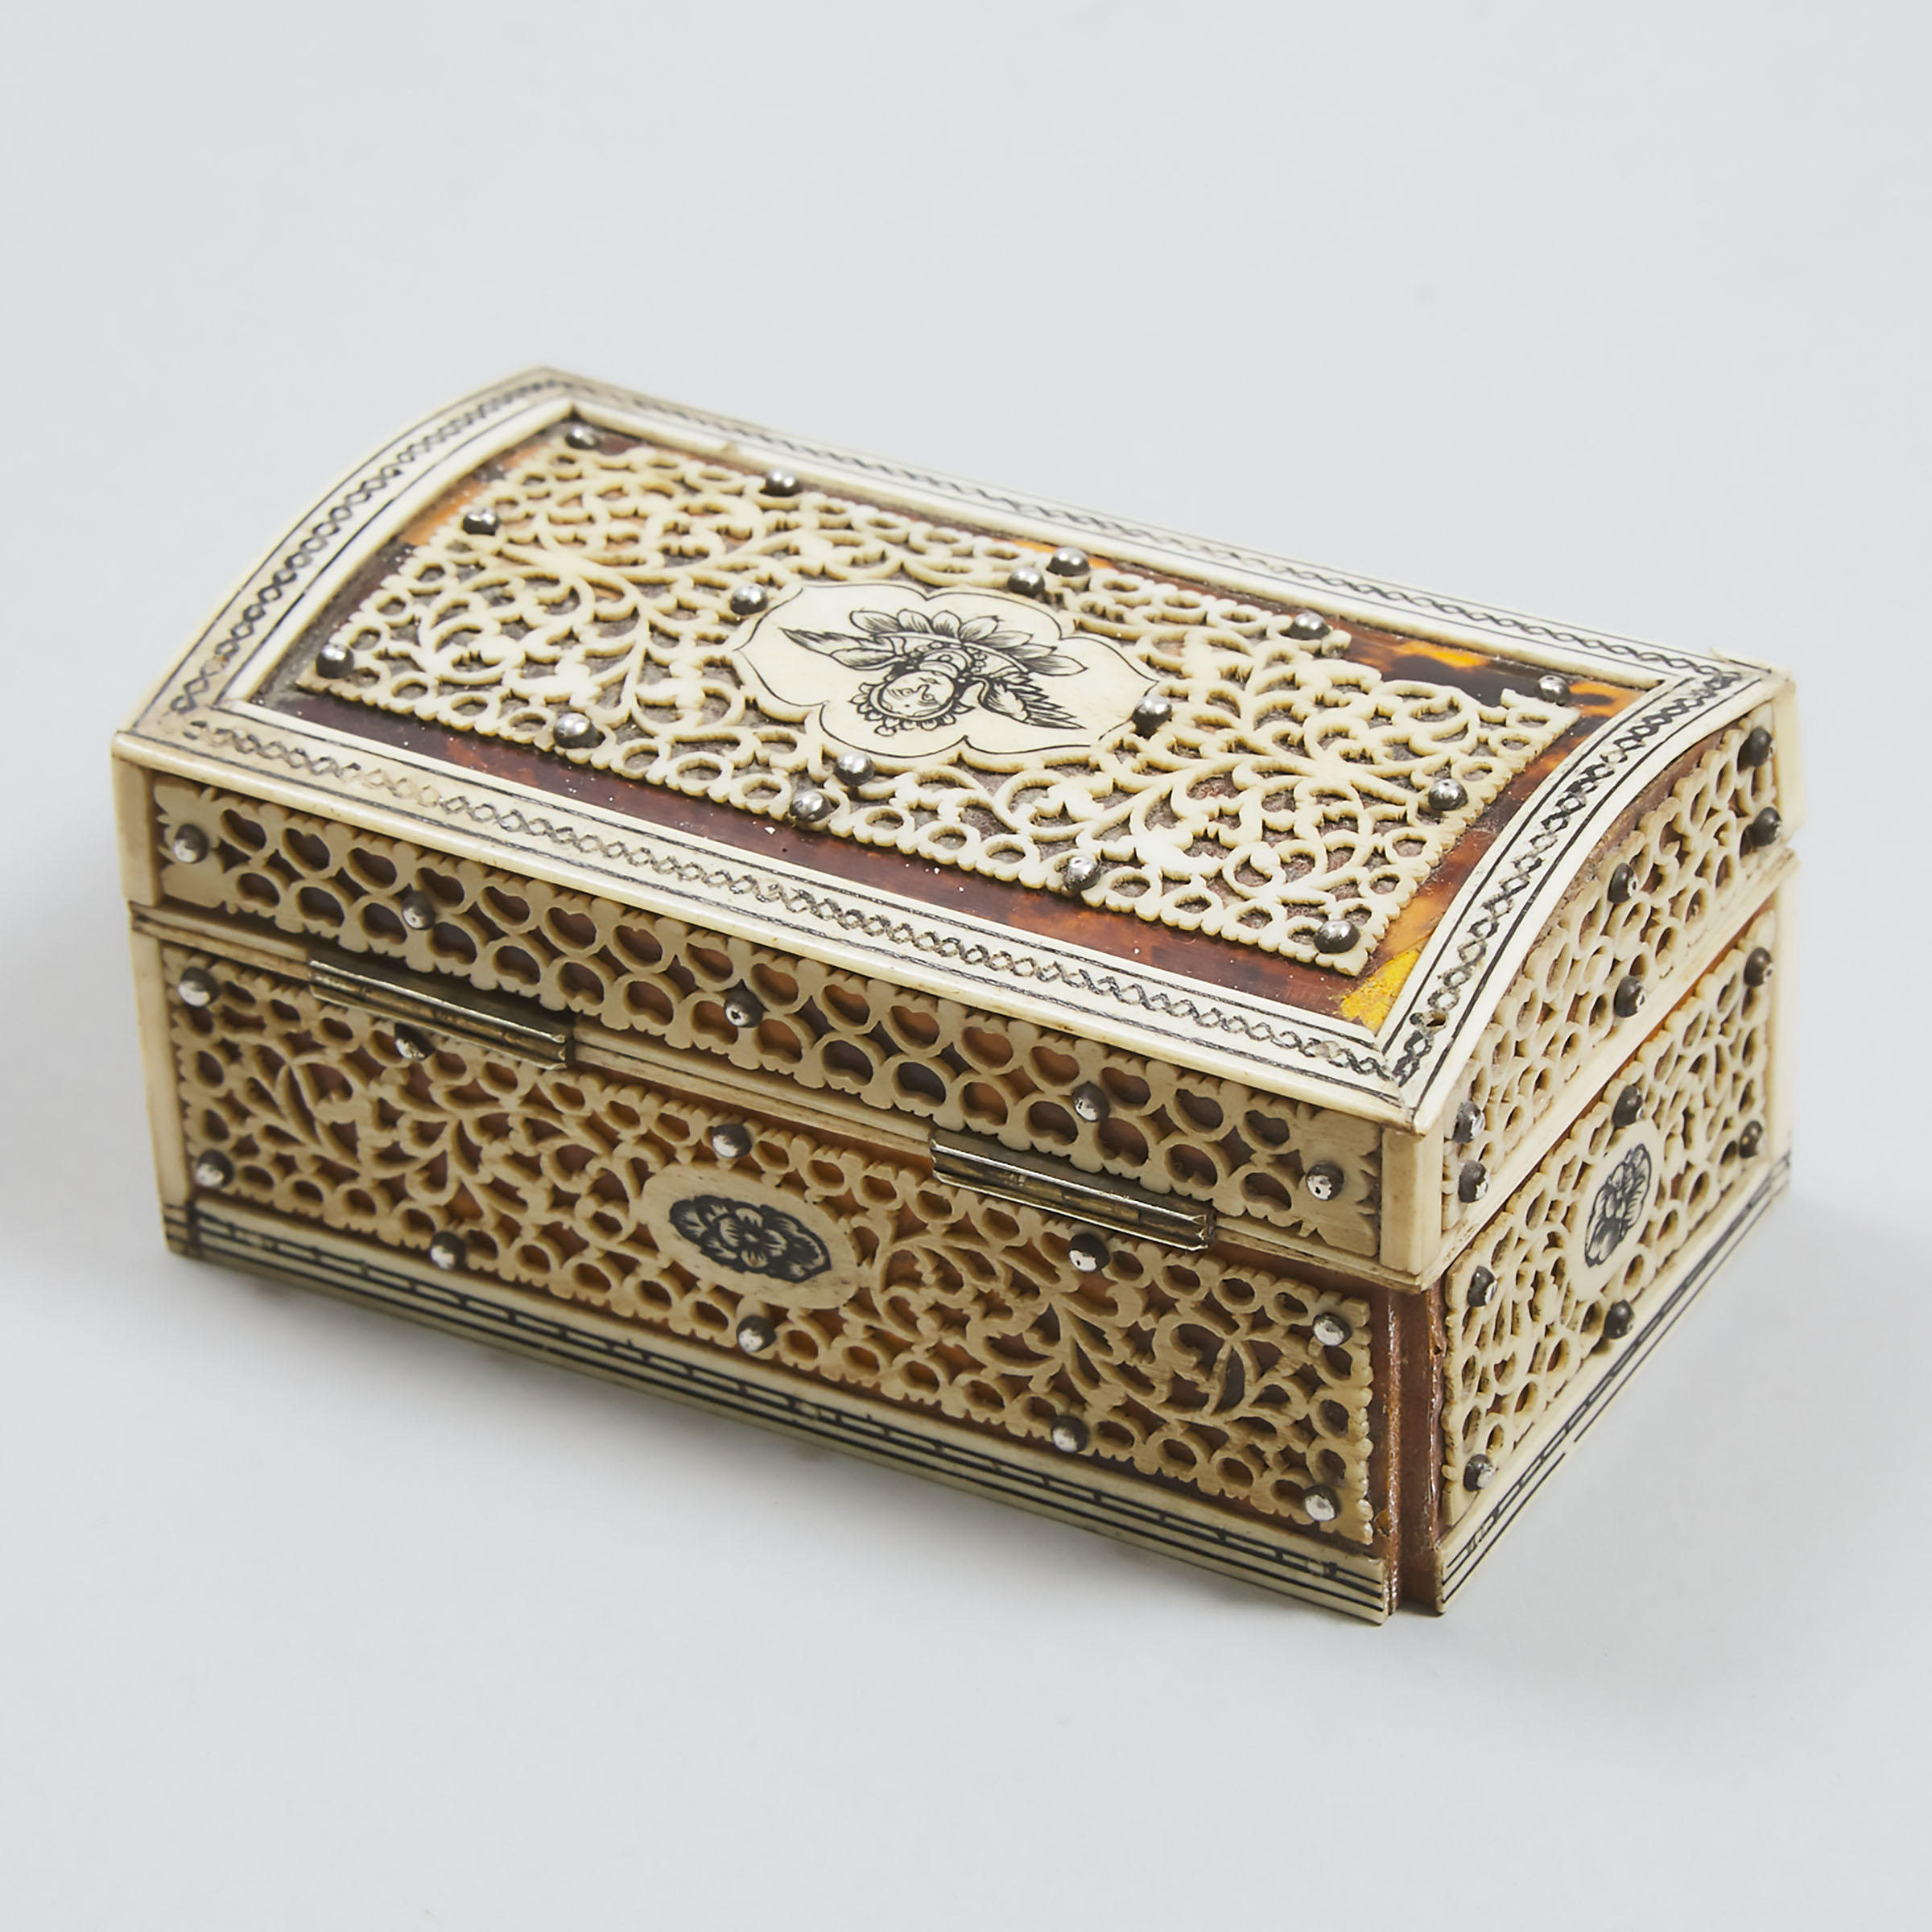 Vizagapatam Silver Studded Ivory Fretwork Overlaid Tortoiseshell Veneered Box, early 20th century